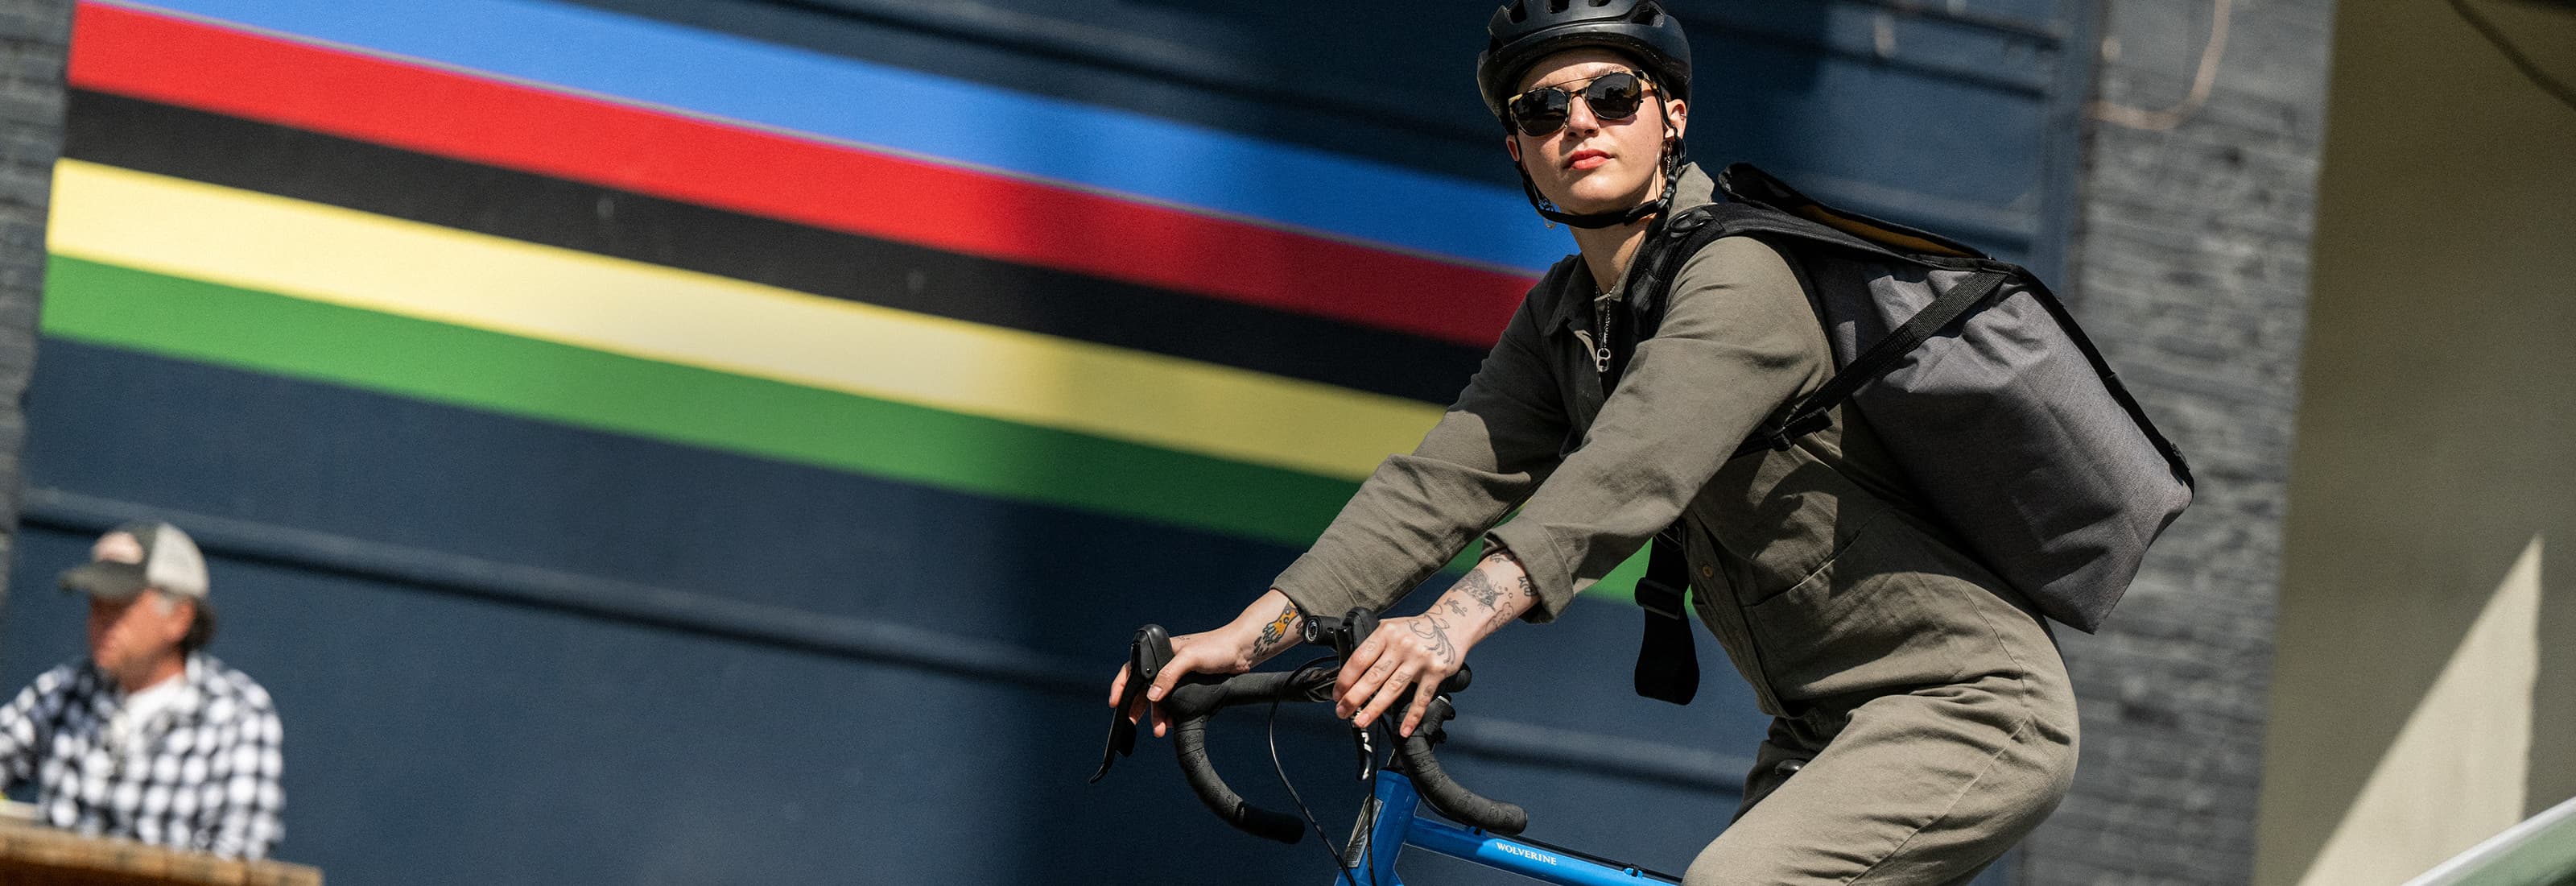 Woman riding a bike, Chrome gives back header image desktop